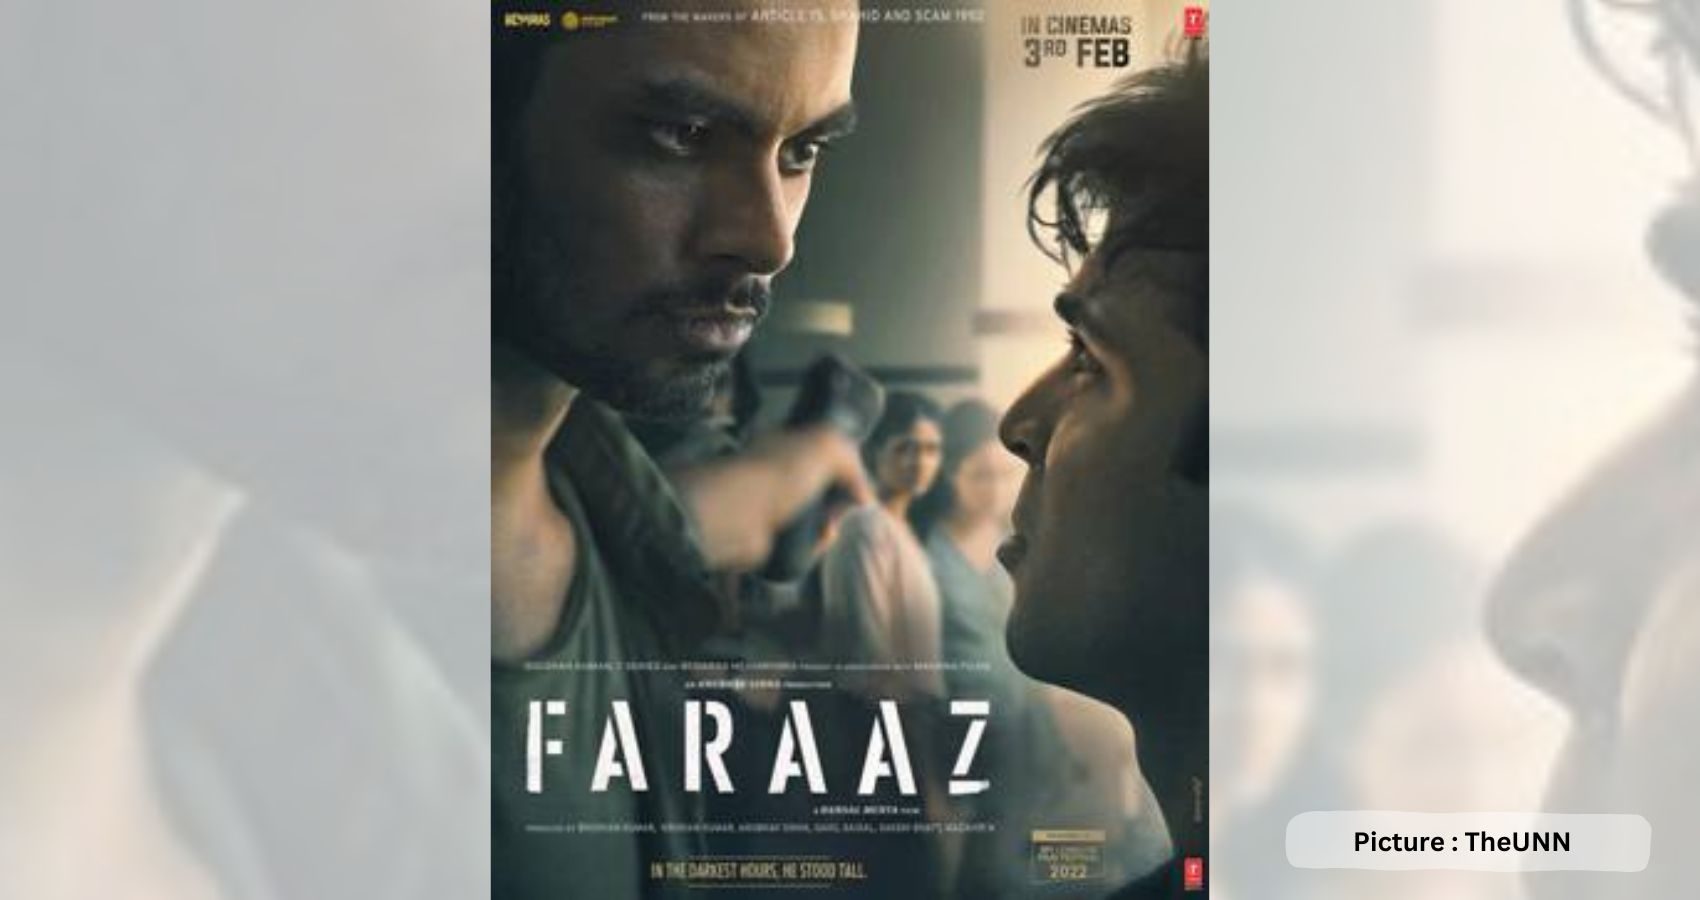 FARAAZ Opens February 3rd